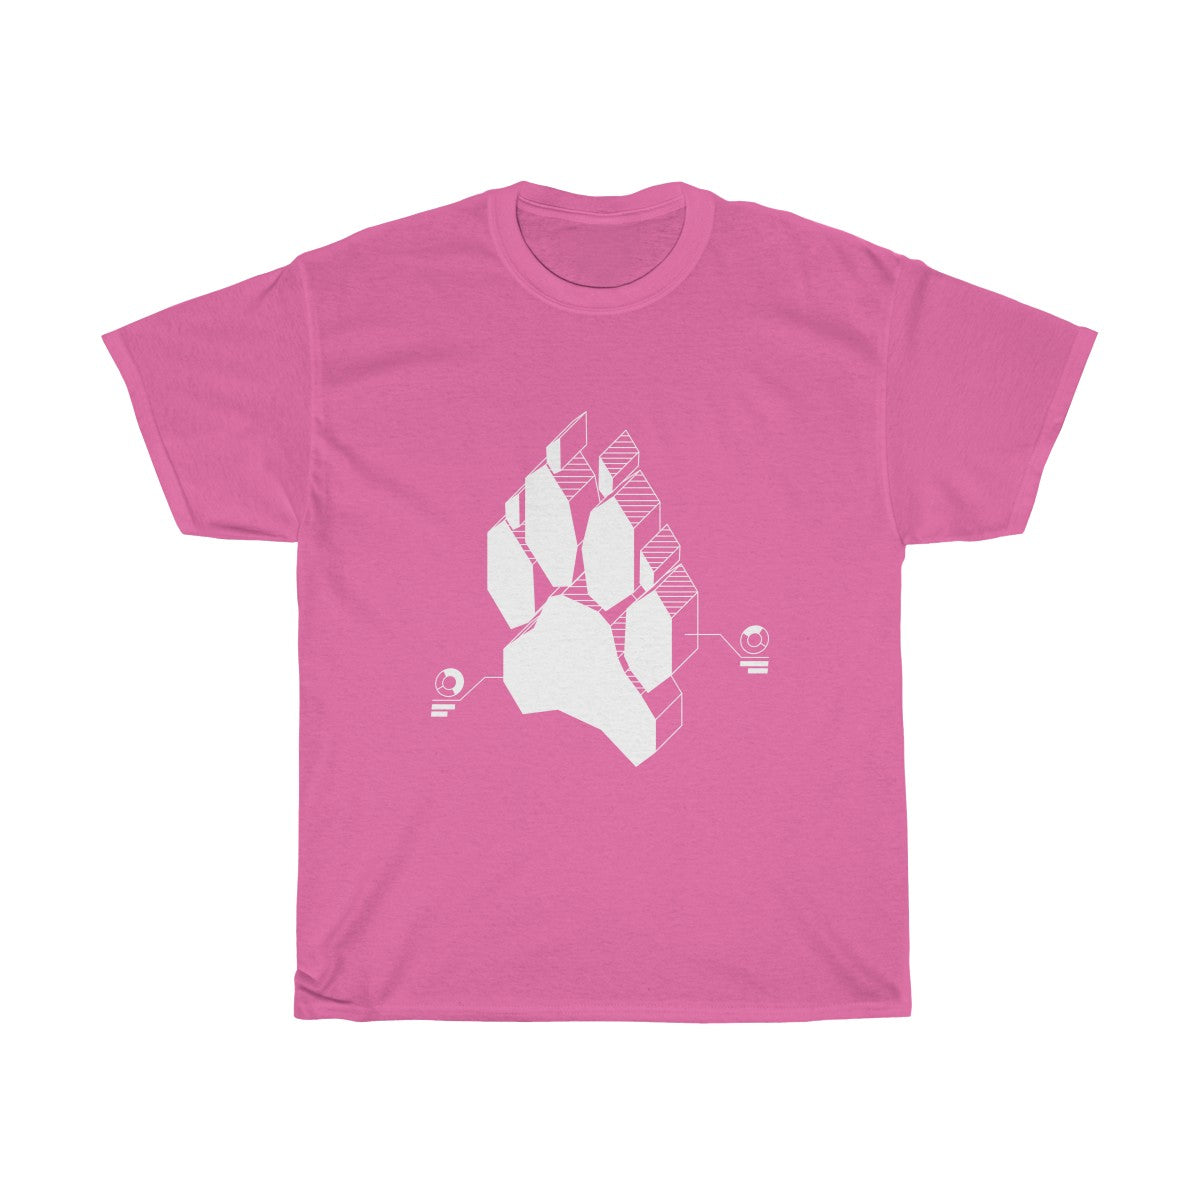 Techno Canine - T-Shirt T-Shirt Wexon Pink S 